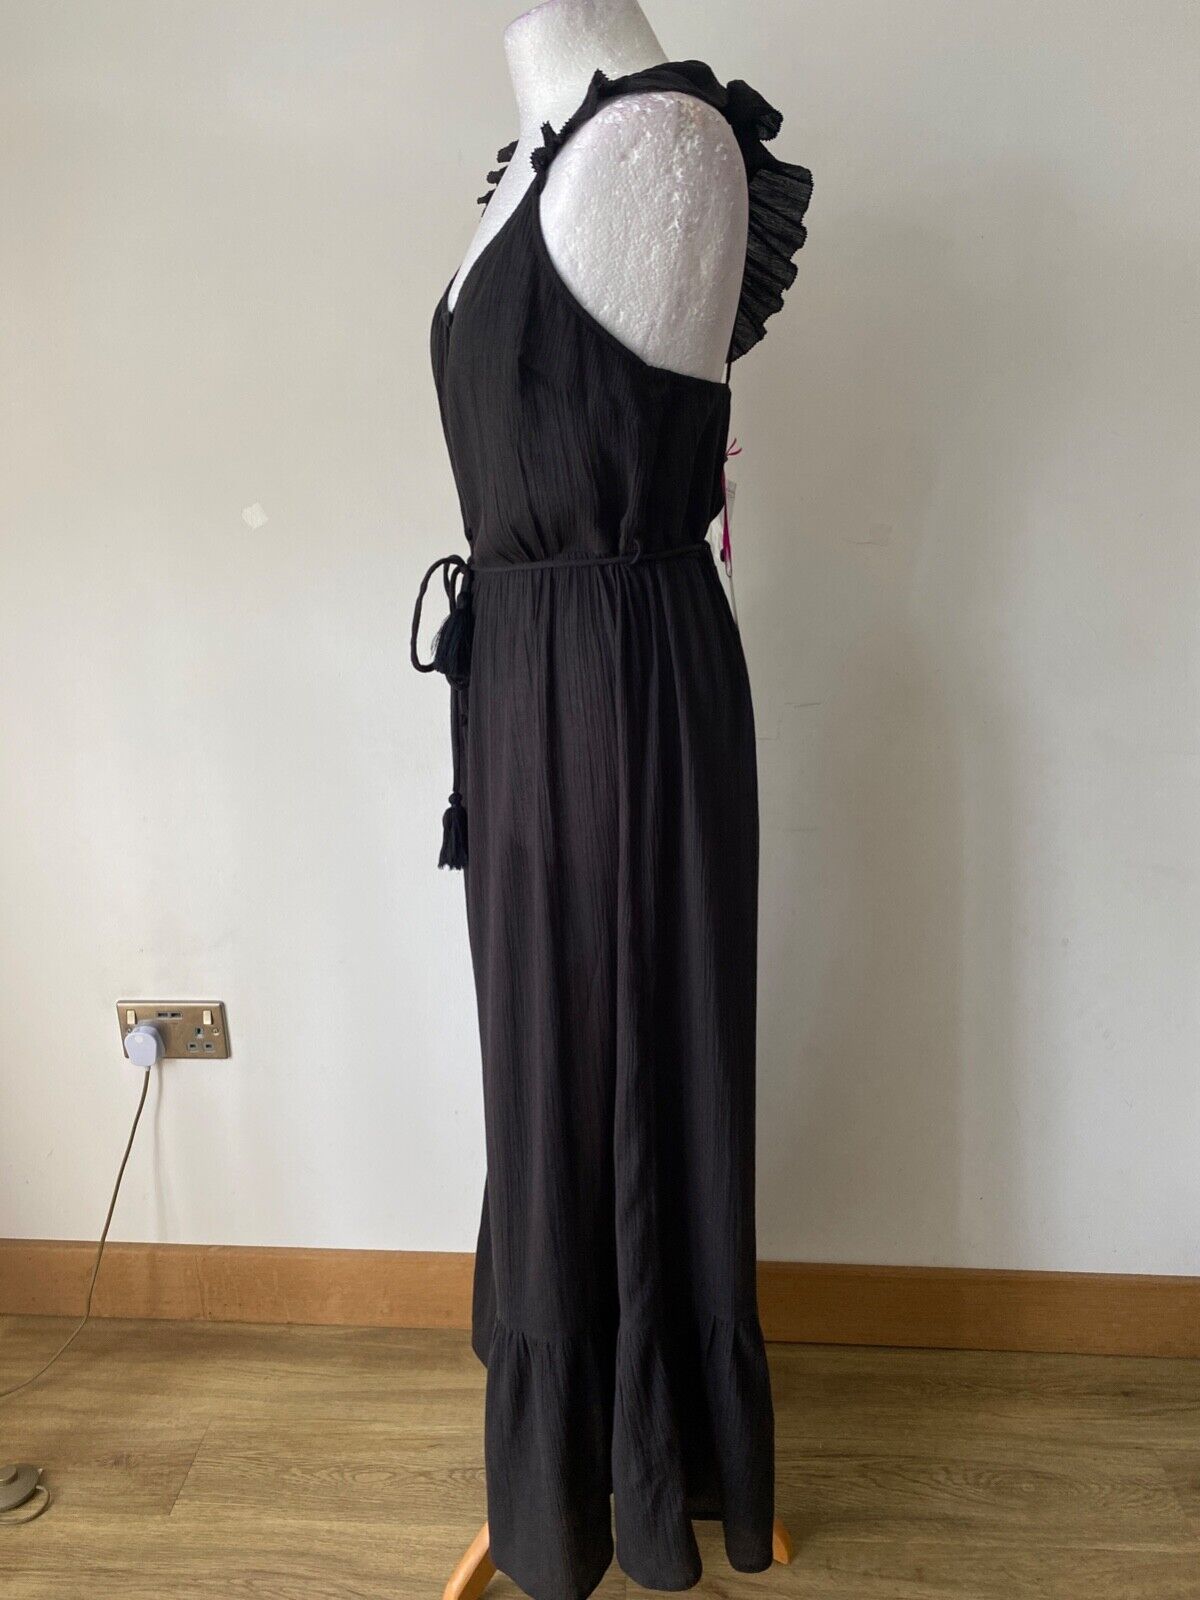 VERY Black Maxi Crepe Summer Dress Size 16